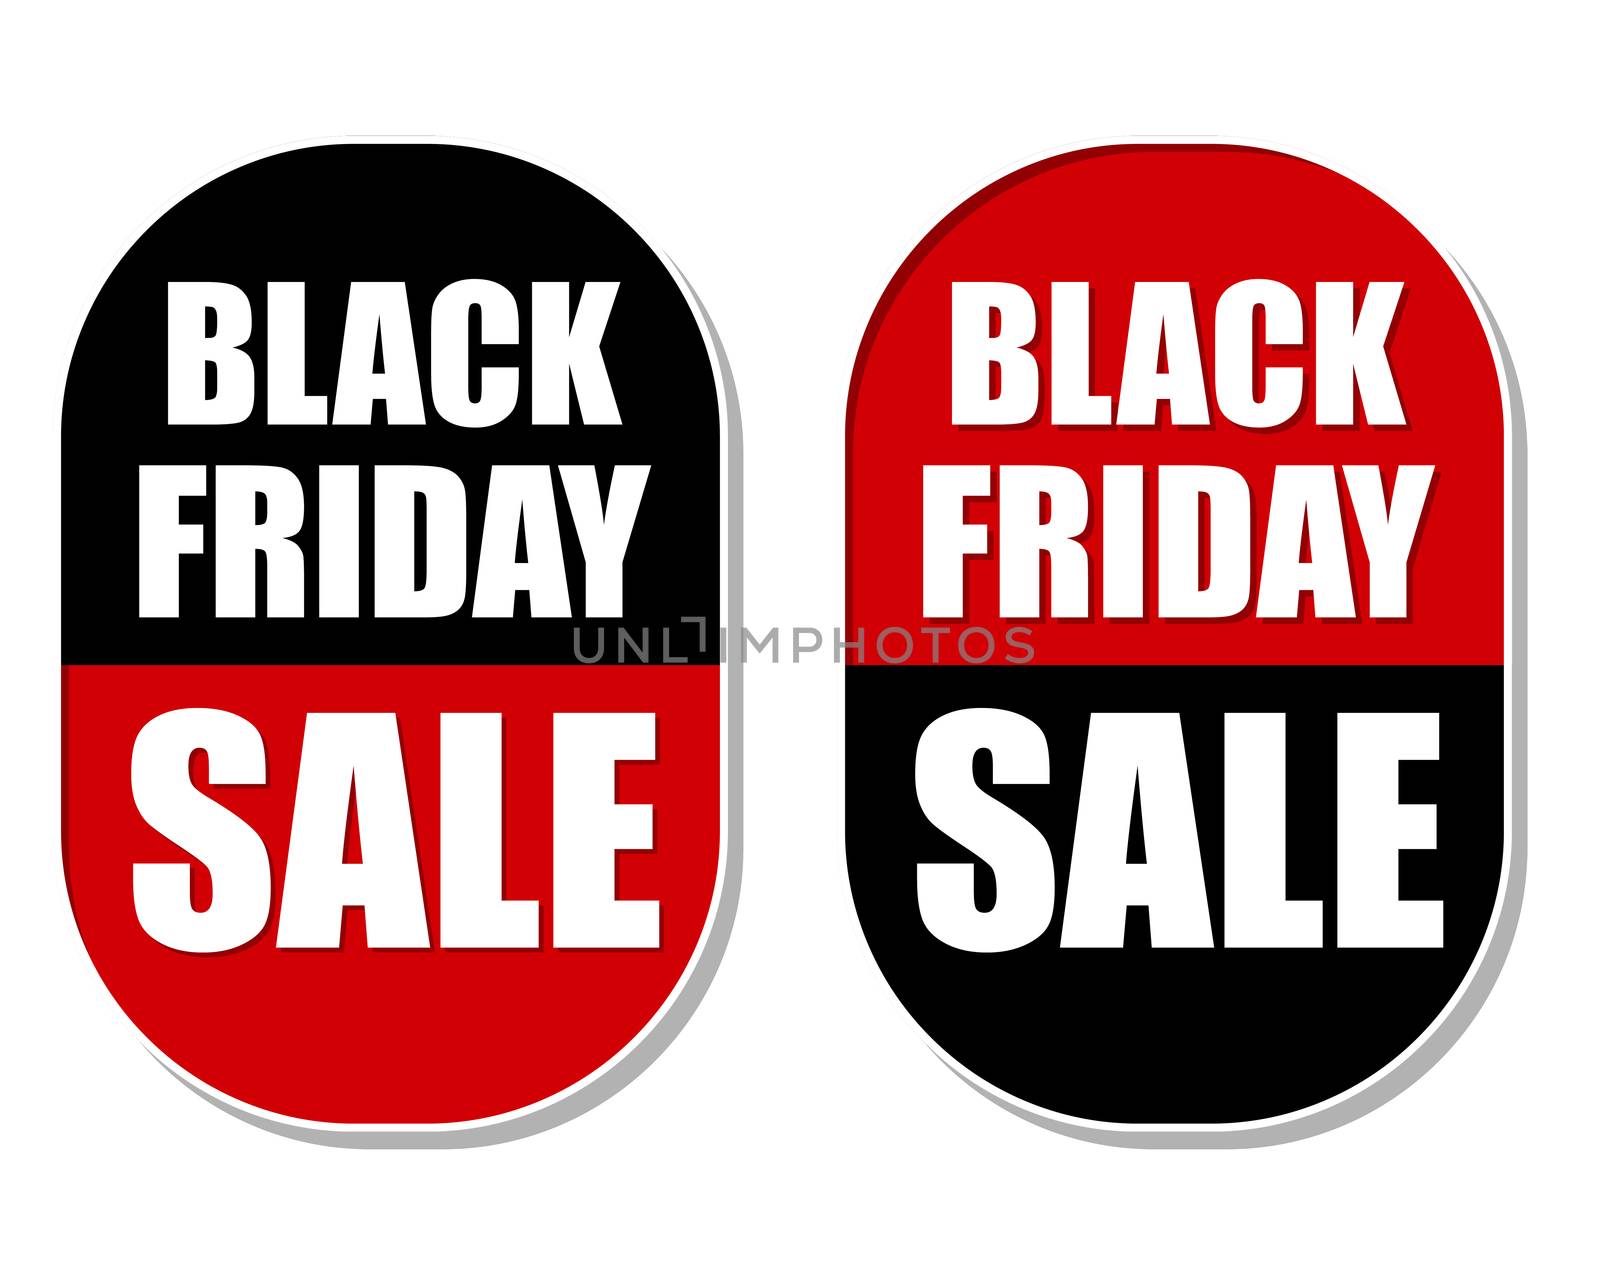 Black friday sale labels by marinini